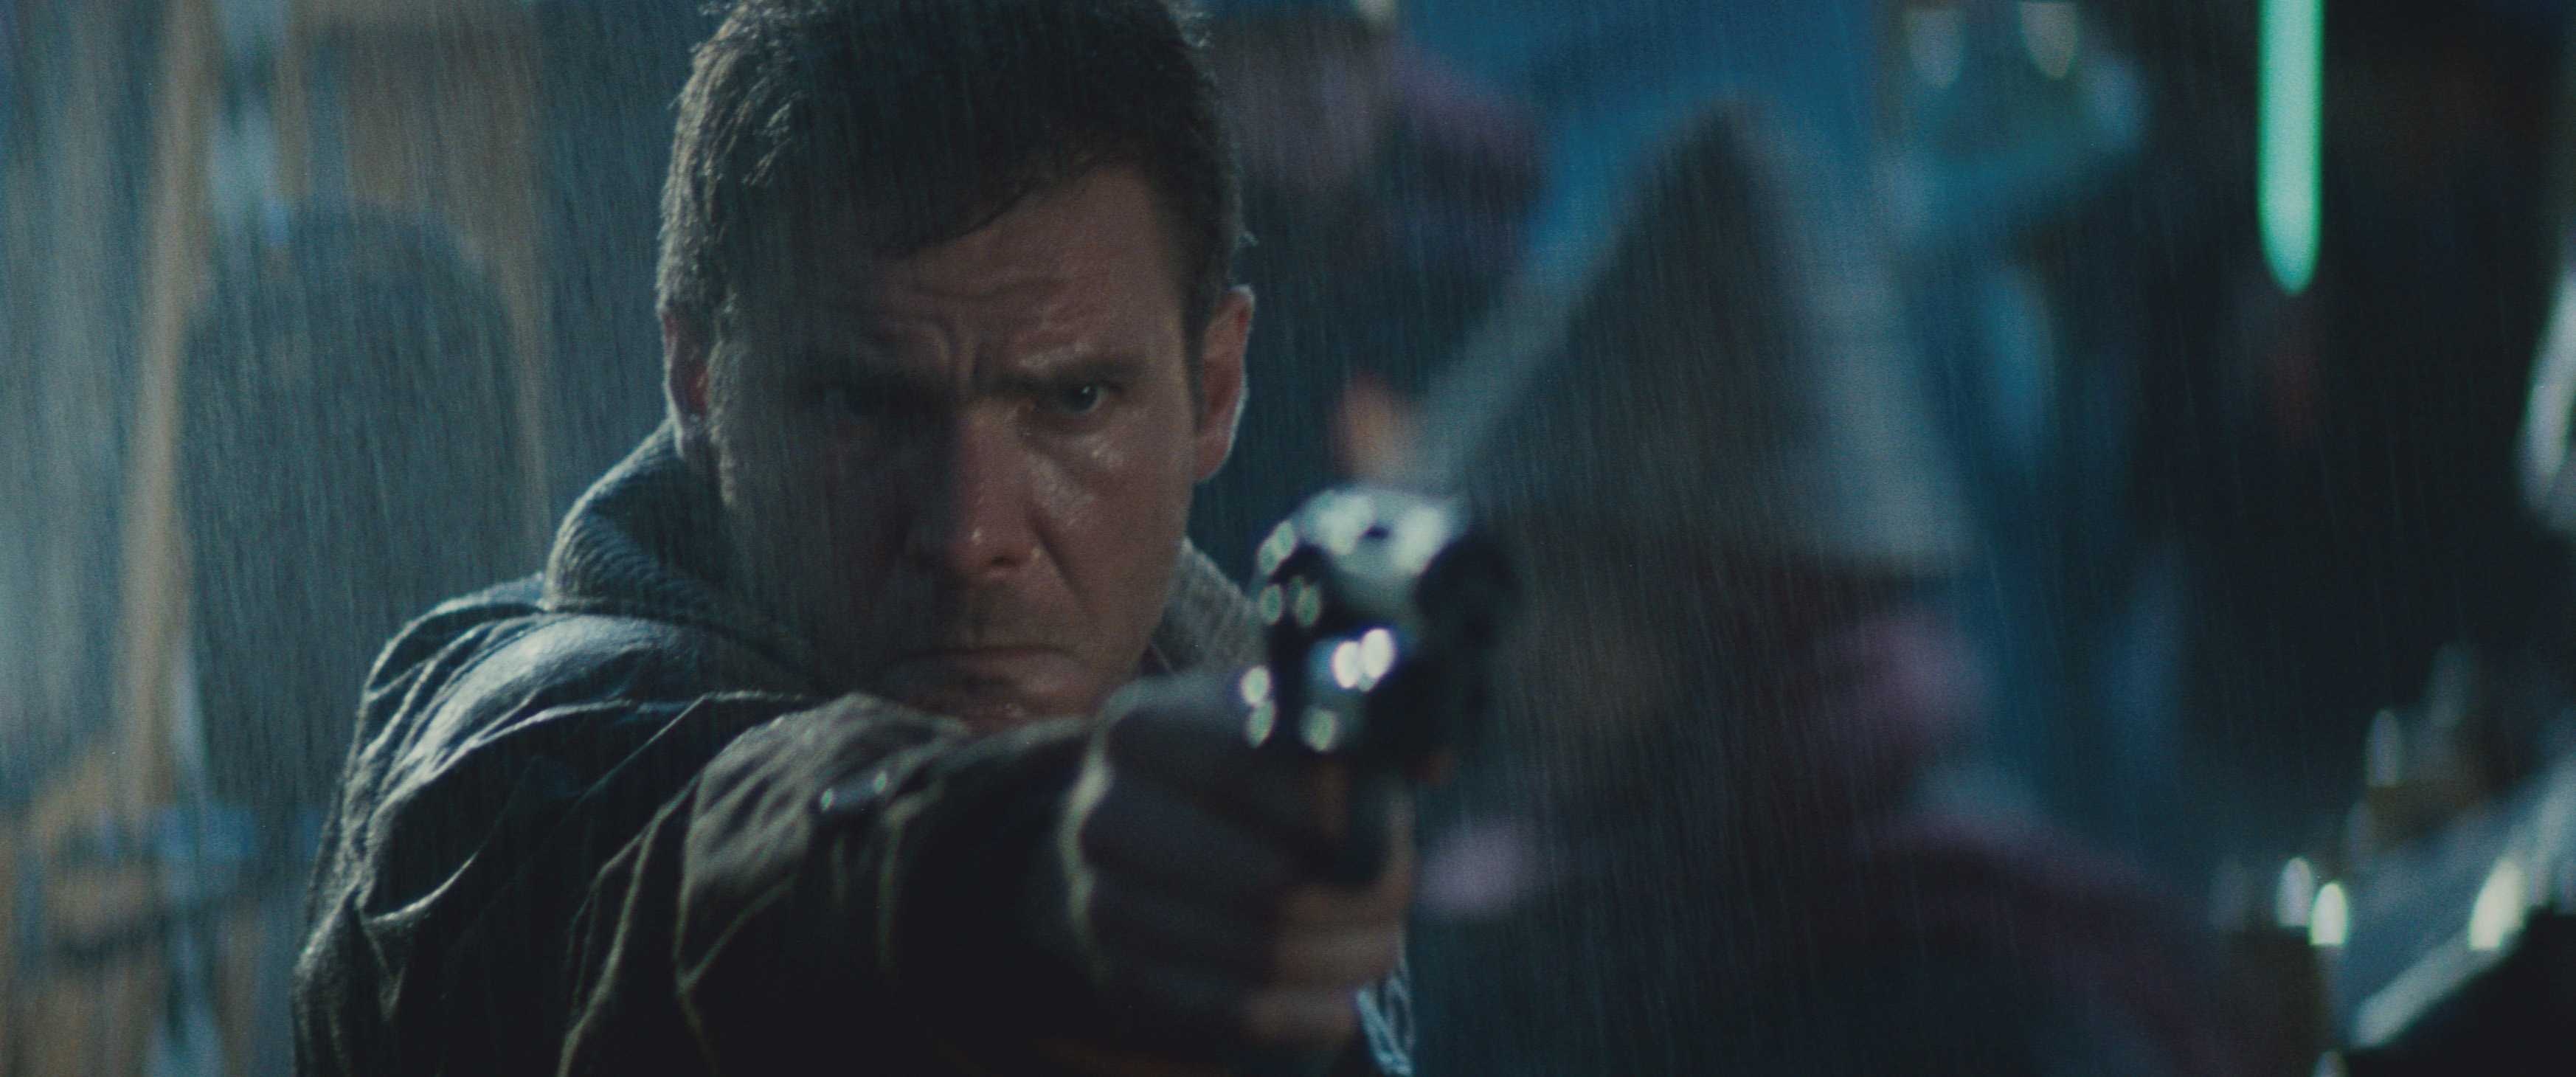 Blade Runner HD wallpaper, Background image, Expert for Movies, 3500x1460 Dual Screen Desktop